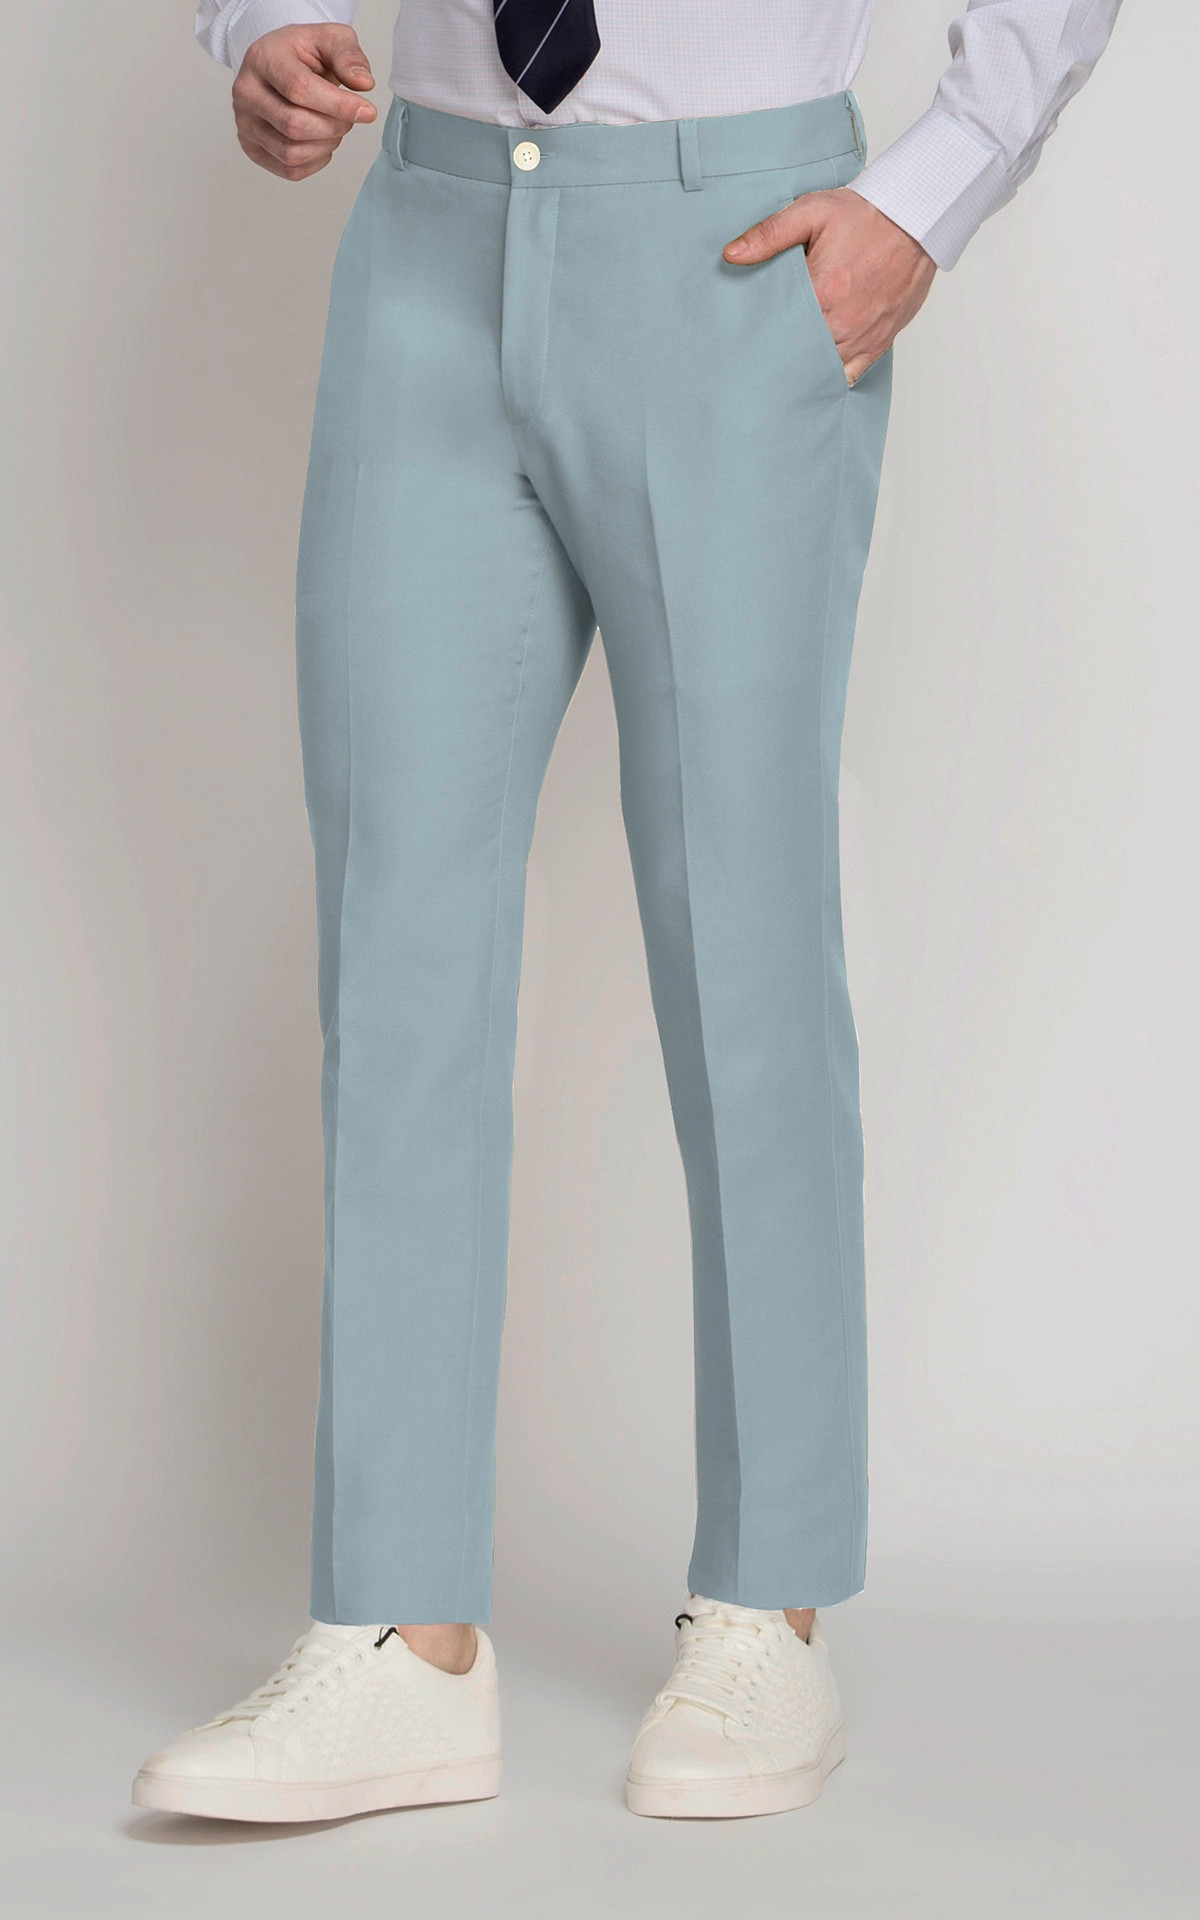 Bluish Grey Cotton Pants - Hangrr